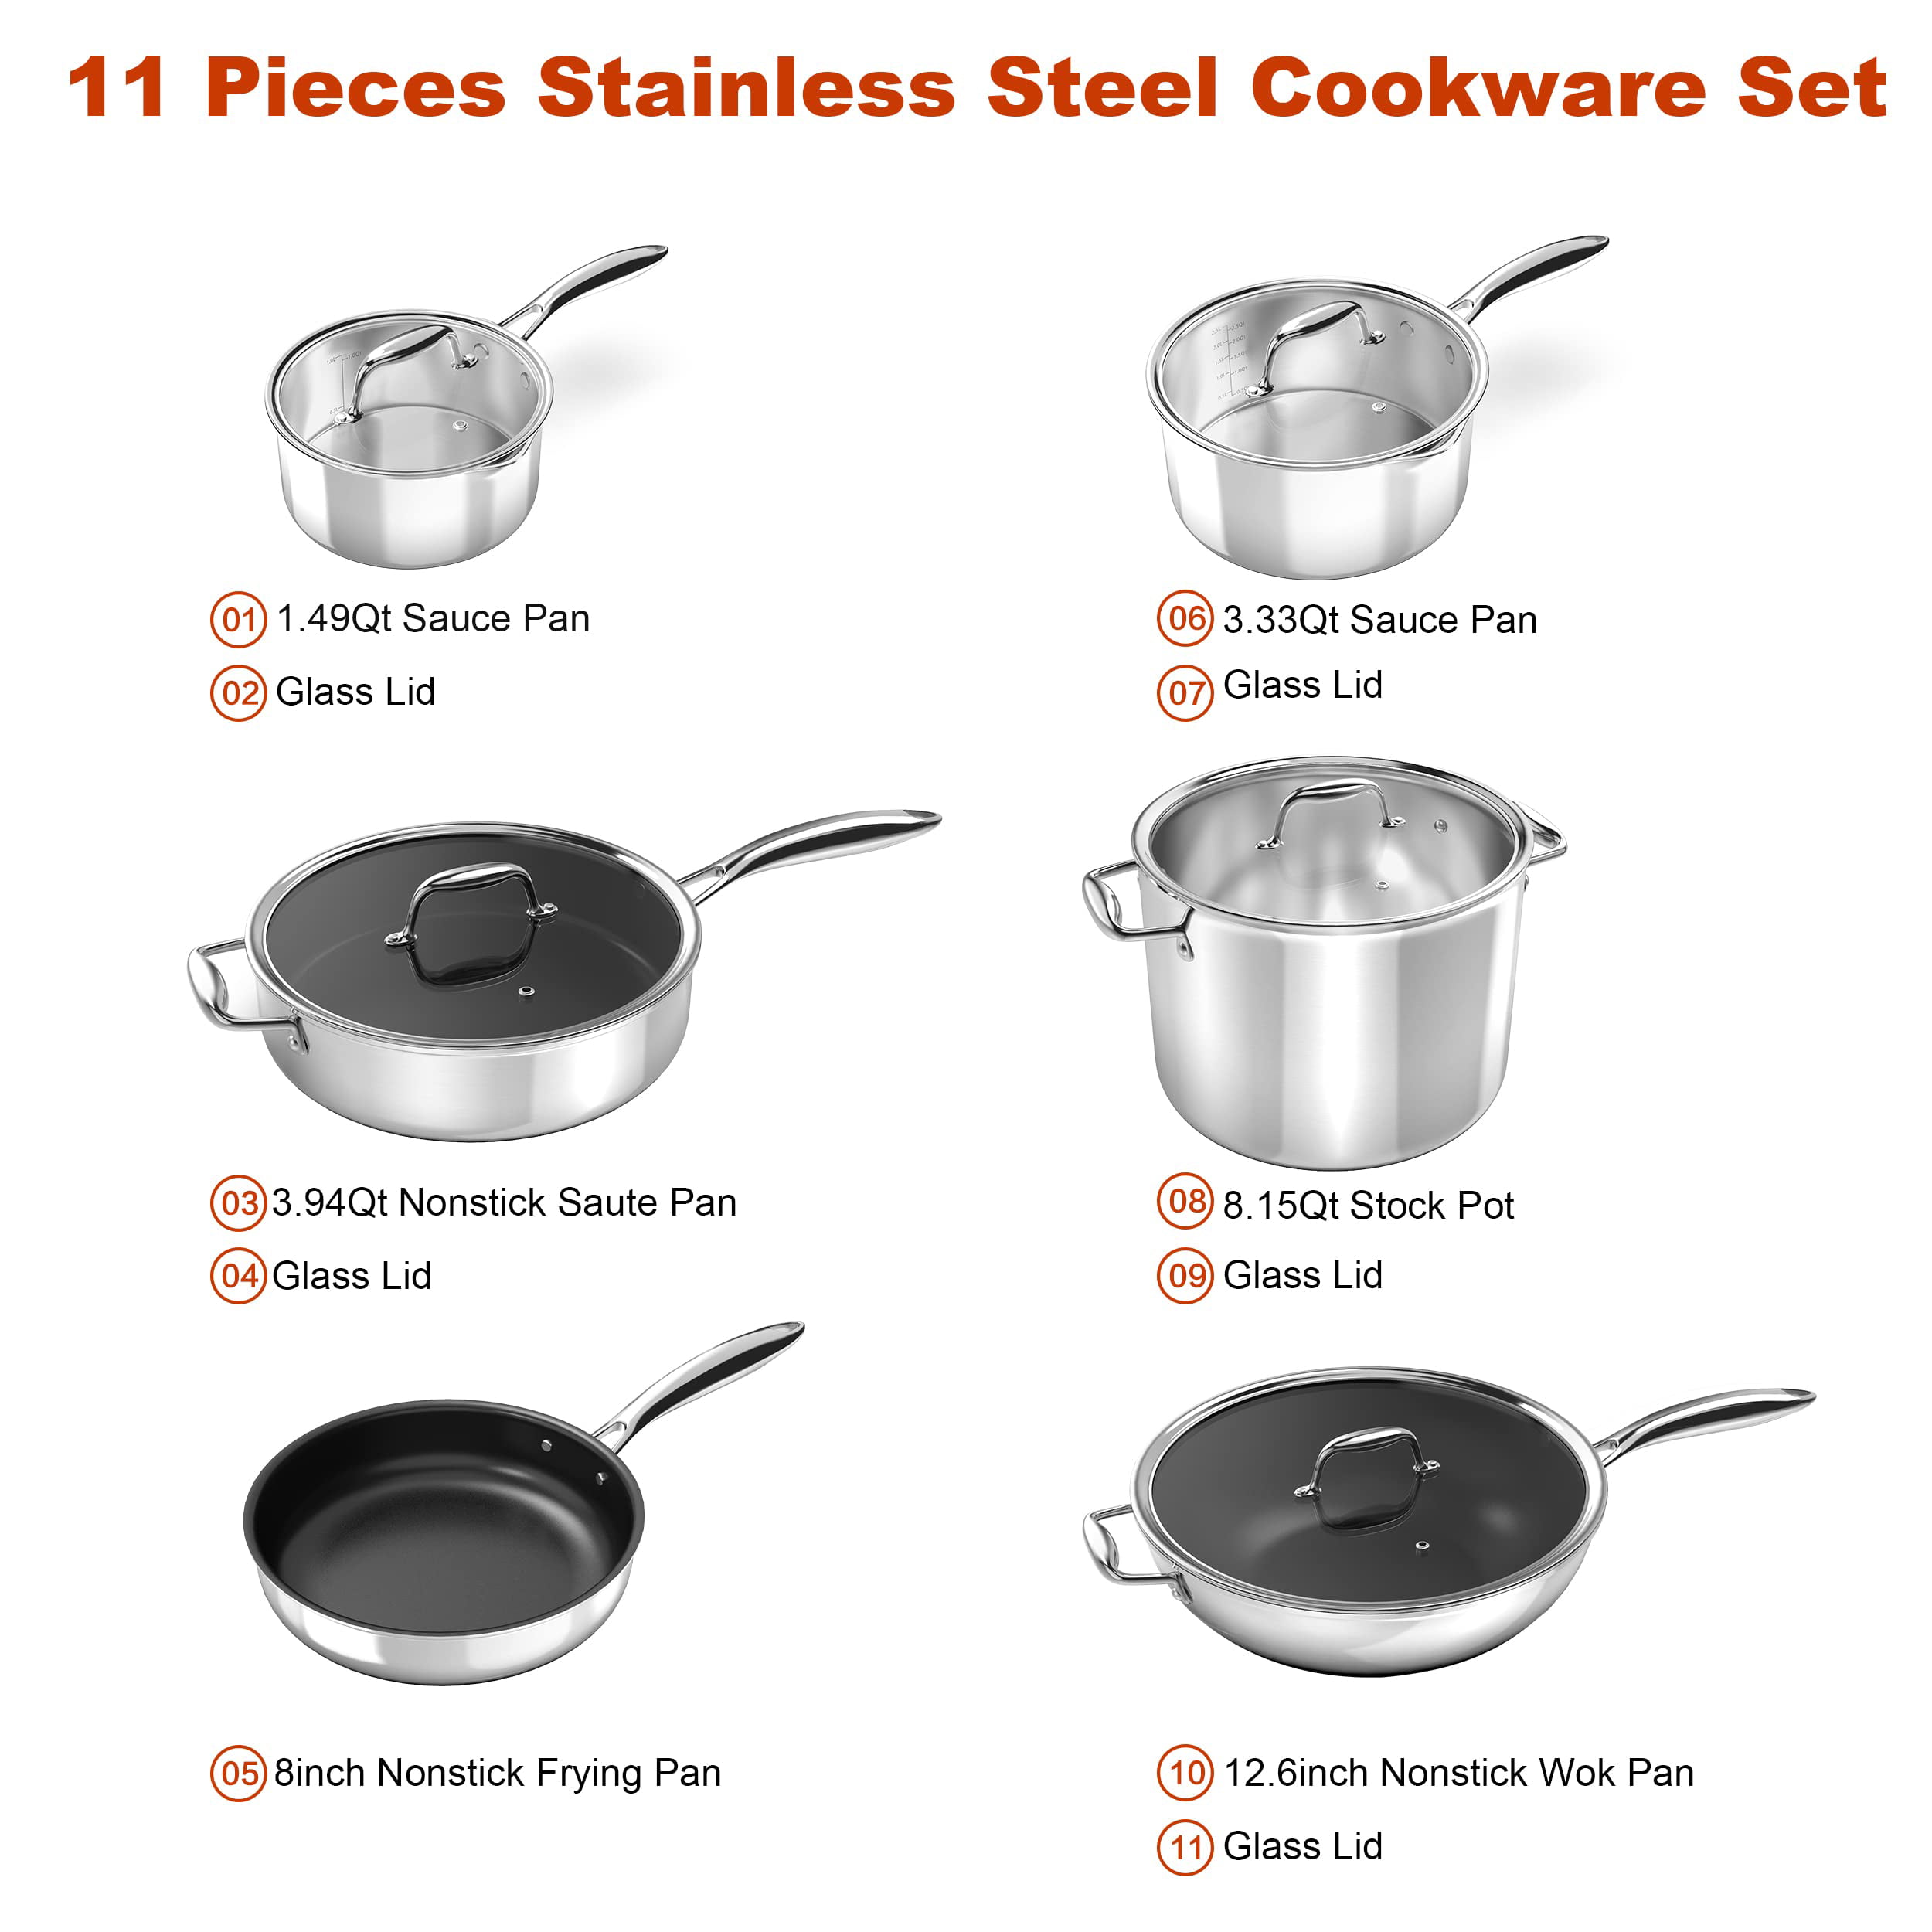 How To Season A Stainless Steel Pan - IMARKU